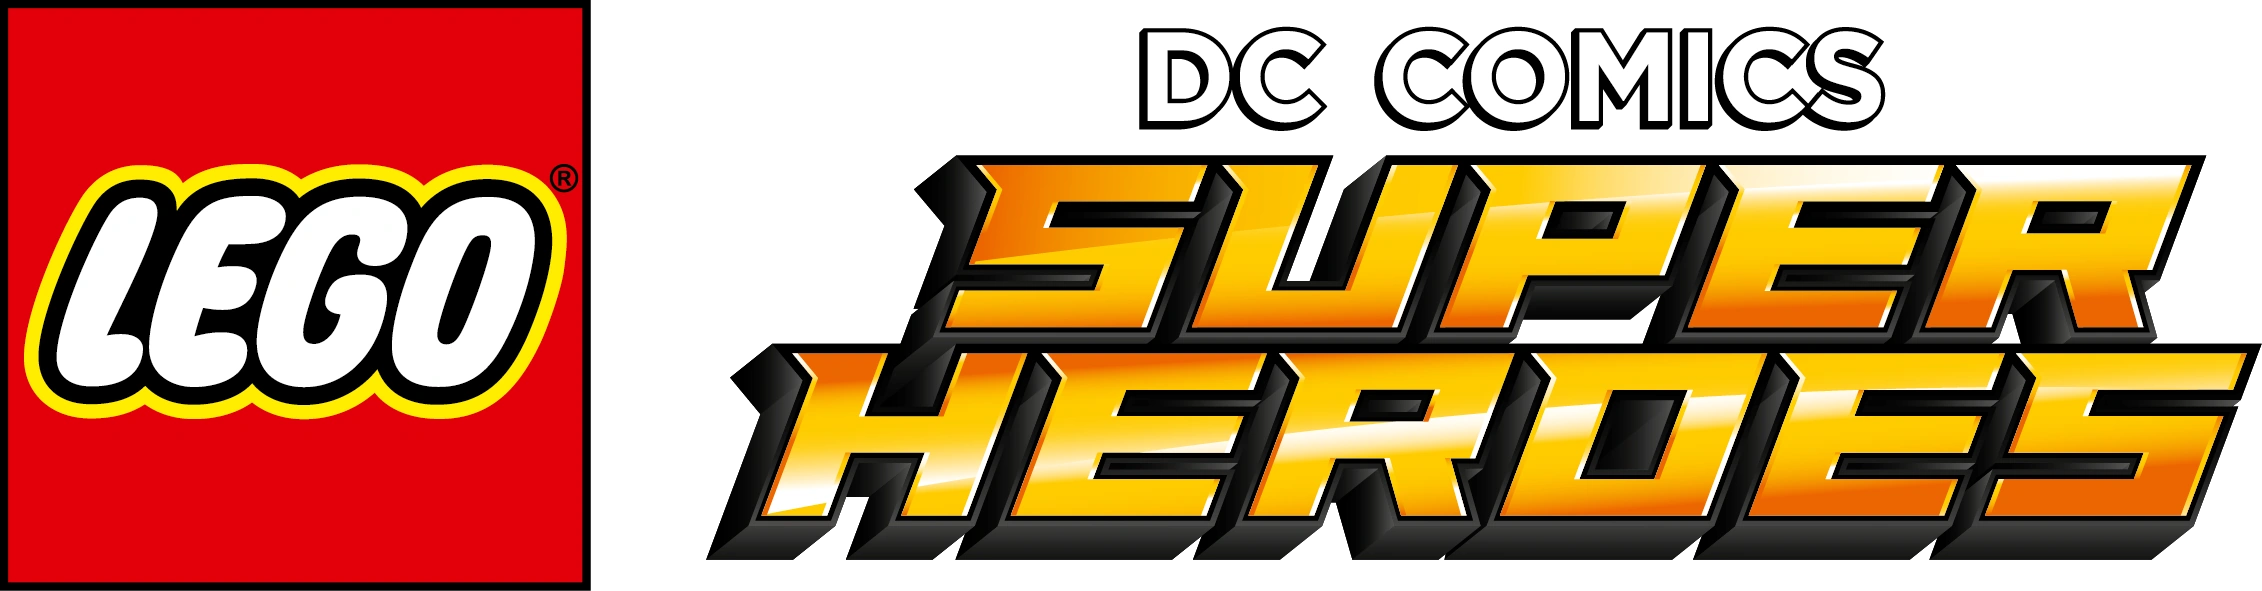 LEGO DC Super Heroes logo